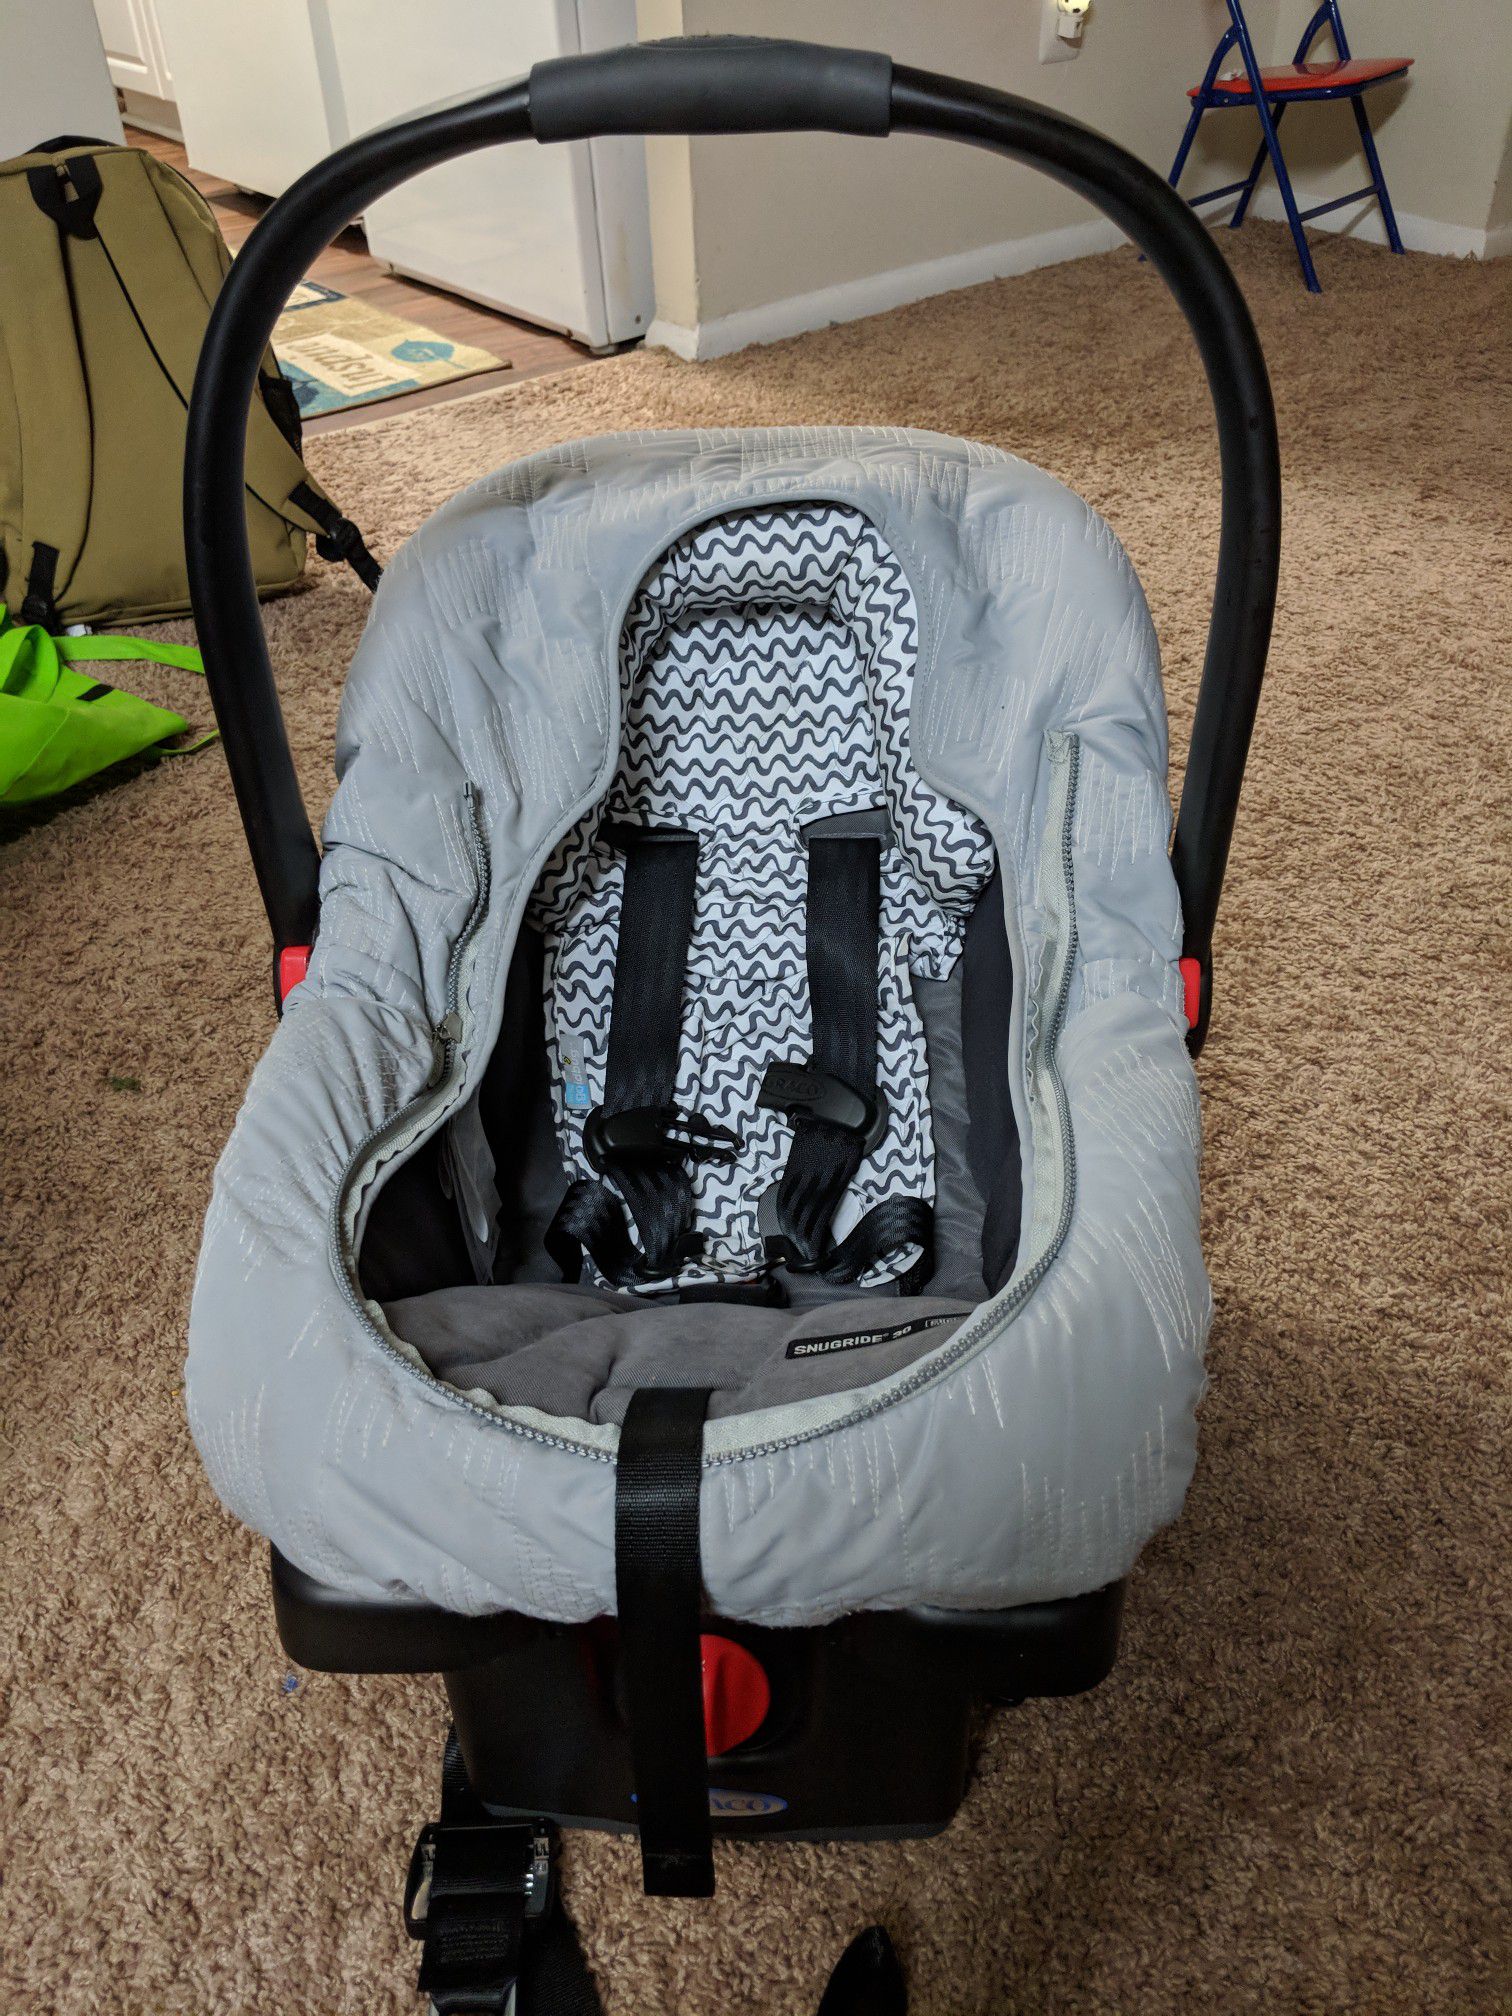 Graco baby car seat & stroller